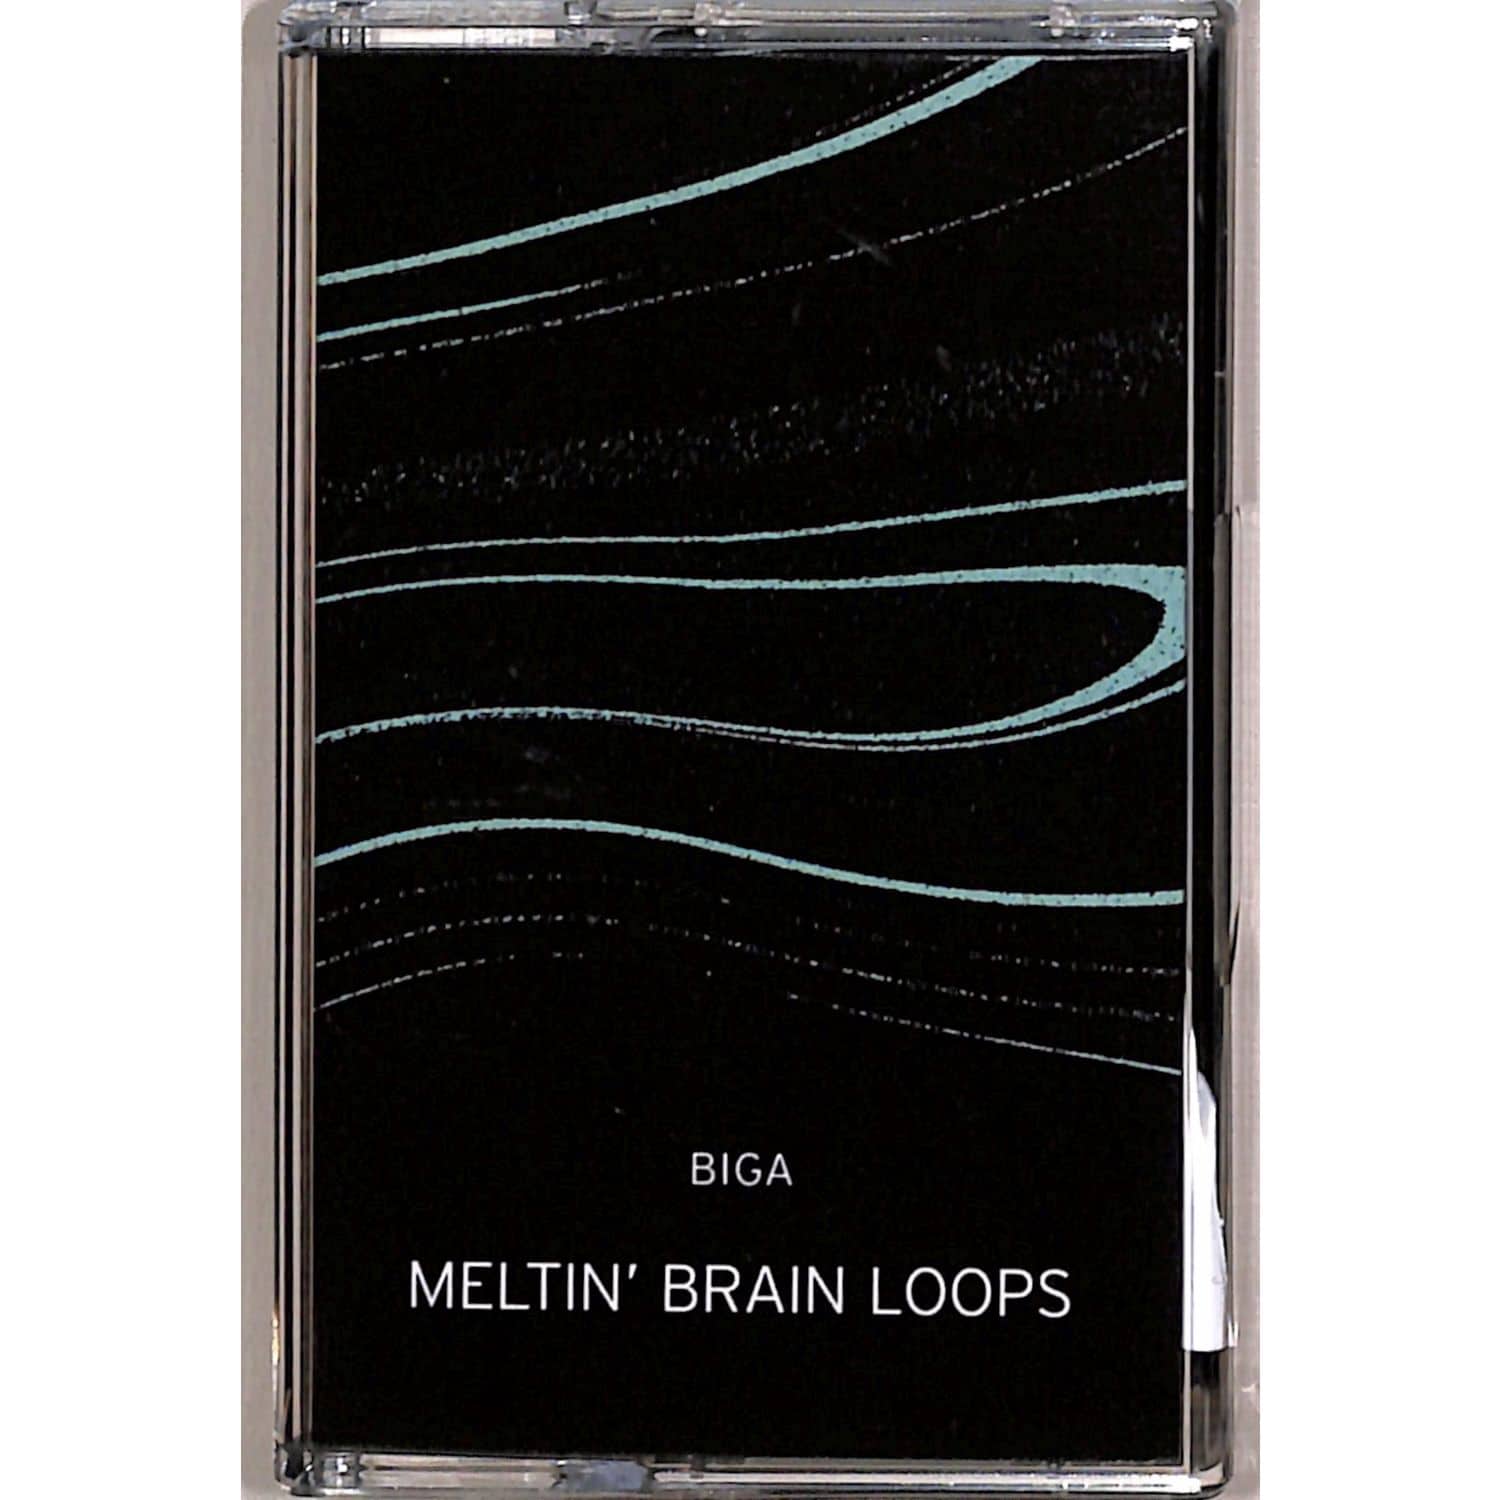 Biga - BELTIN BRAIN LOOPS 